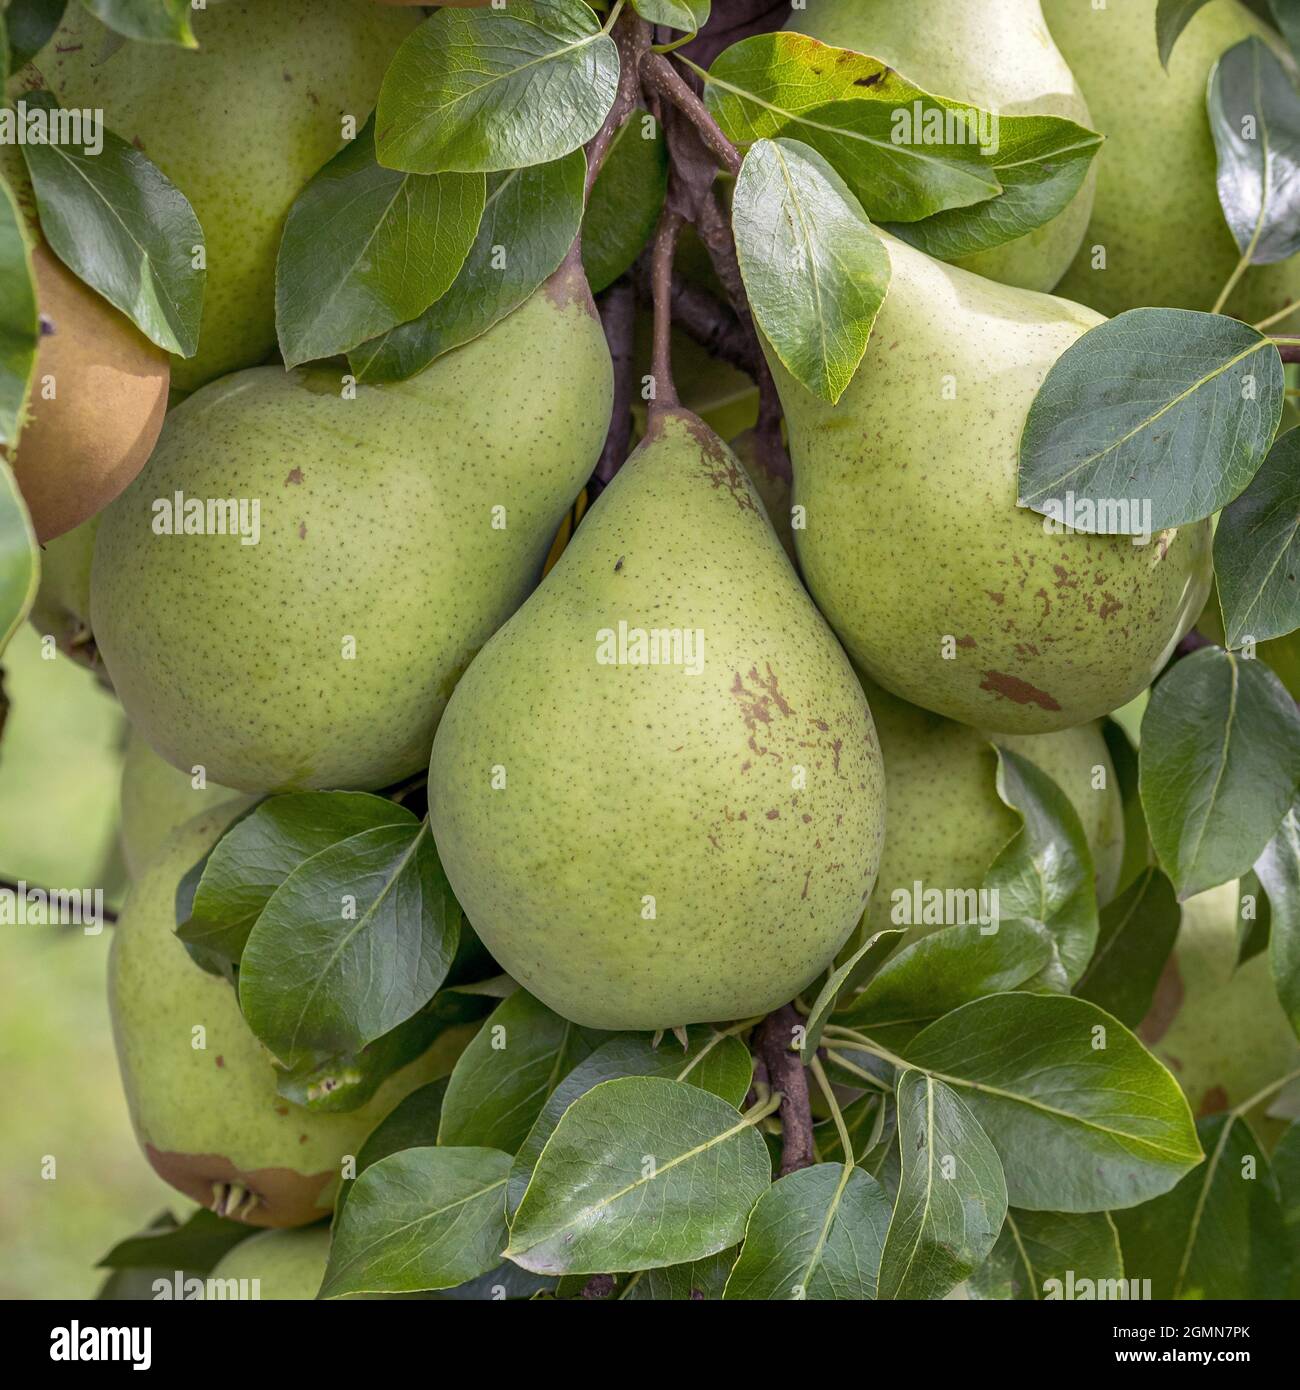 Birne (Pyrus communis 'Six' Butterbirne', Pyrus communis Six' Butterbirne), Birne auf einem Baum, Sorte Six' Butterbirne Stockfoto